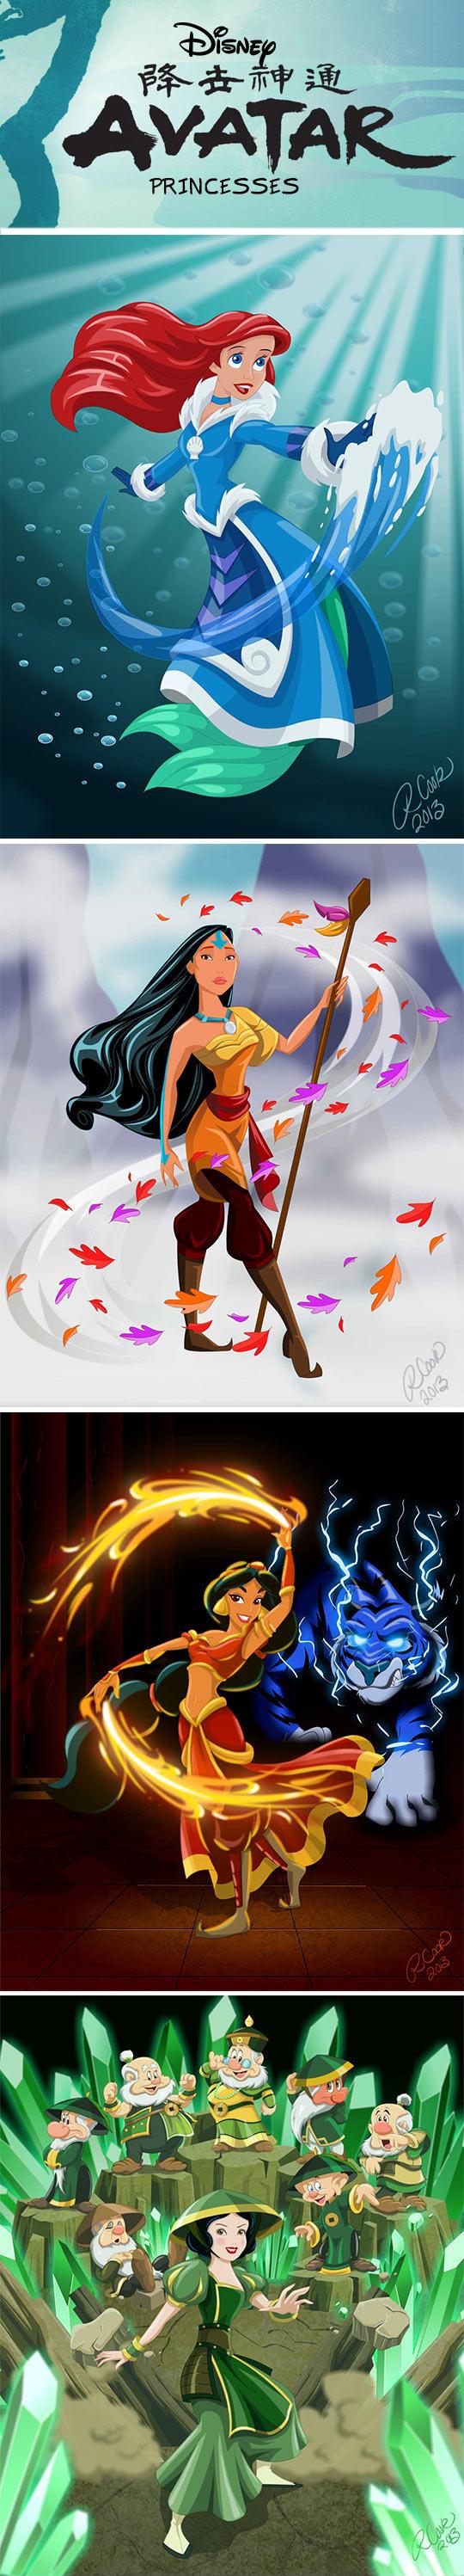 Avatar Disney Princesses